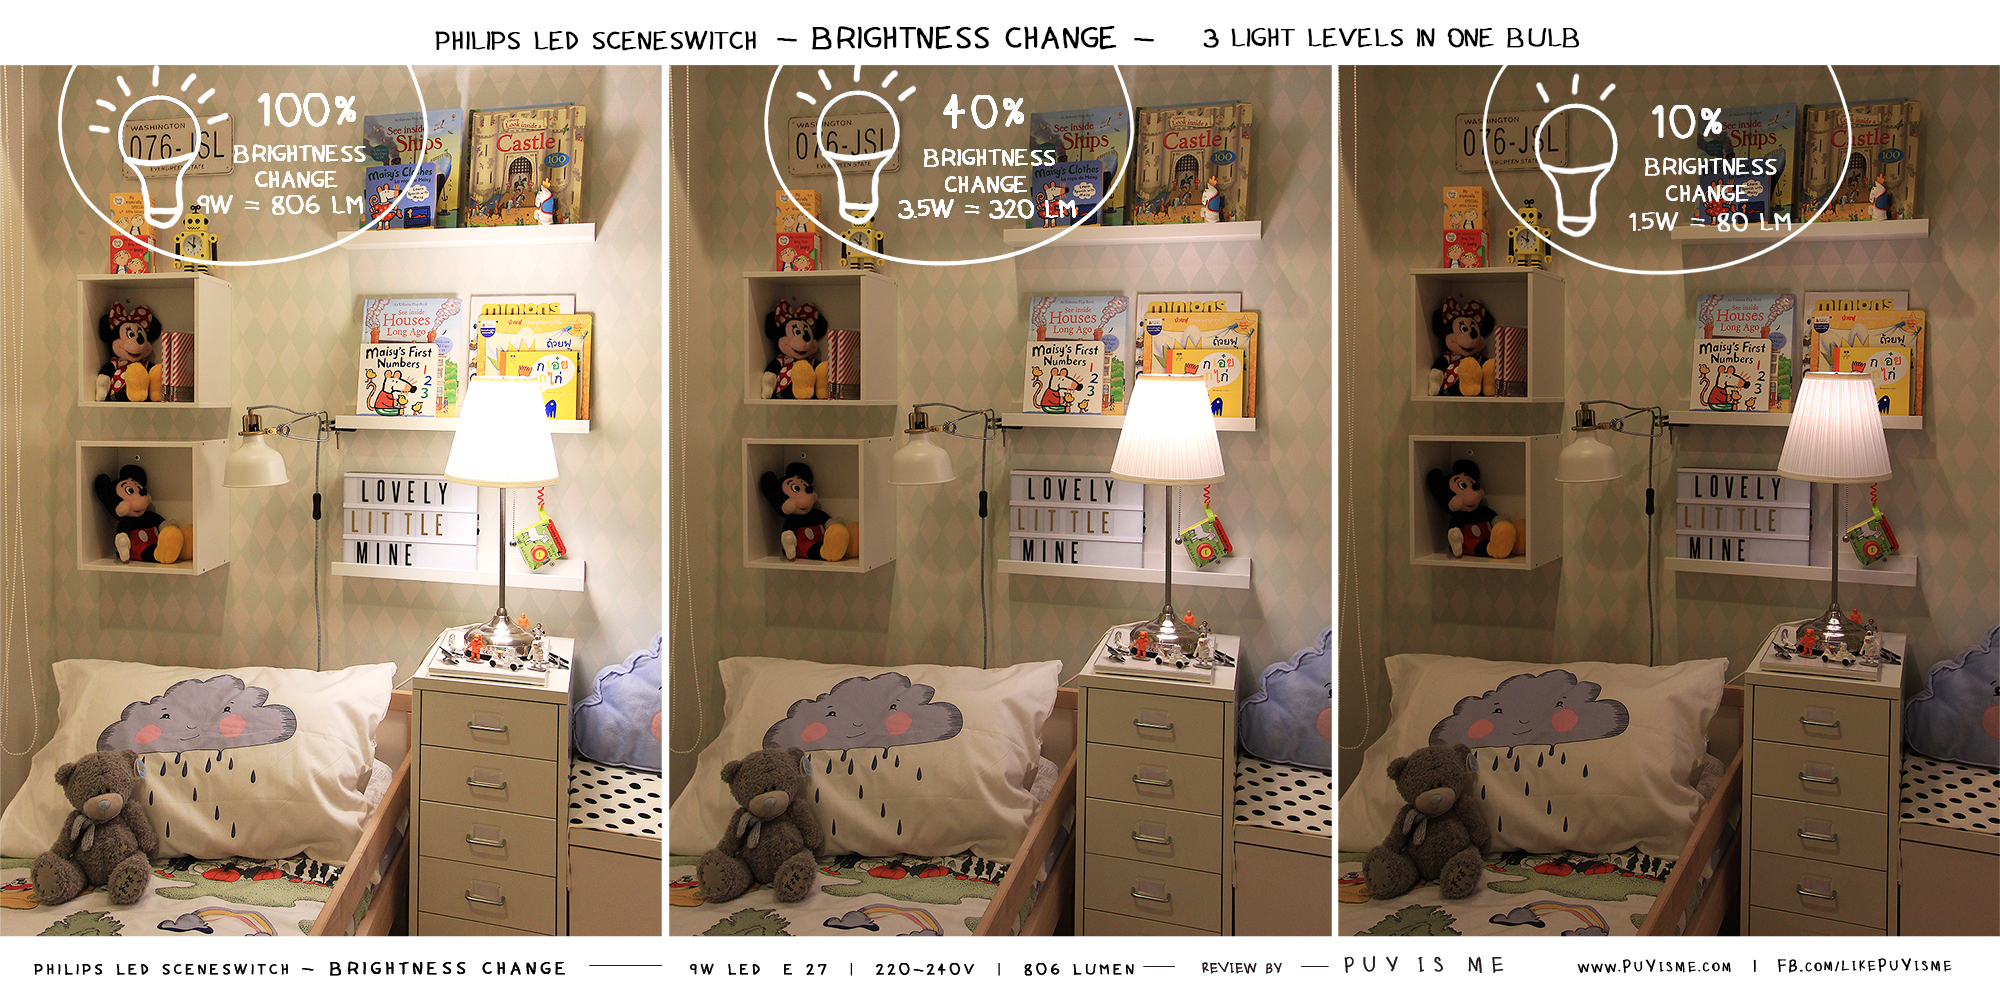 Philips - Brightness Change 06 - Bed